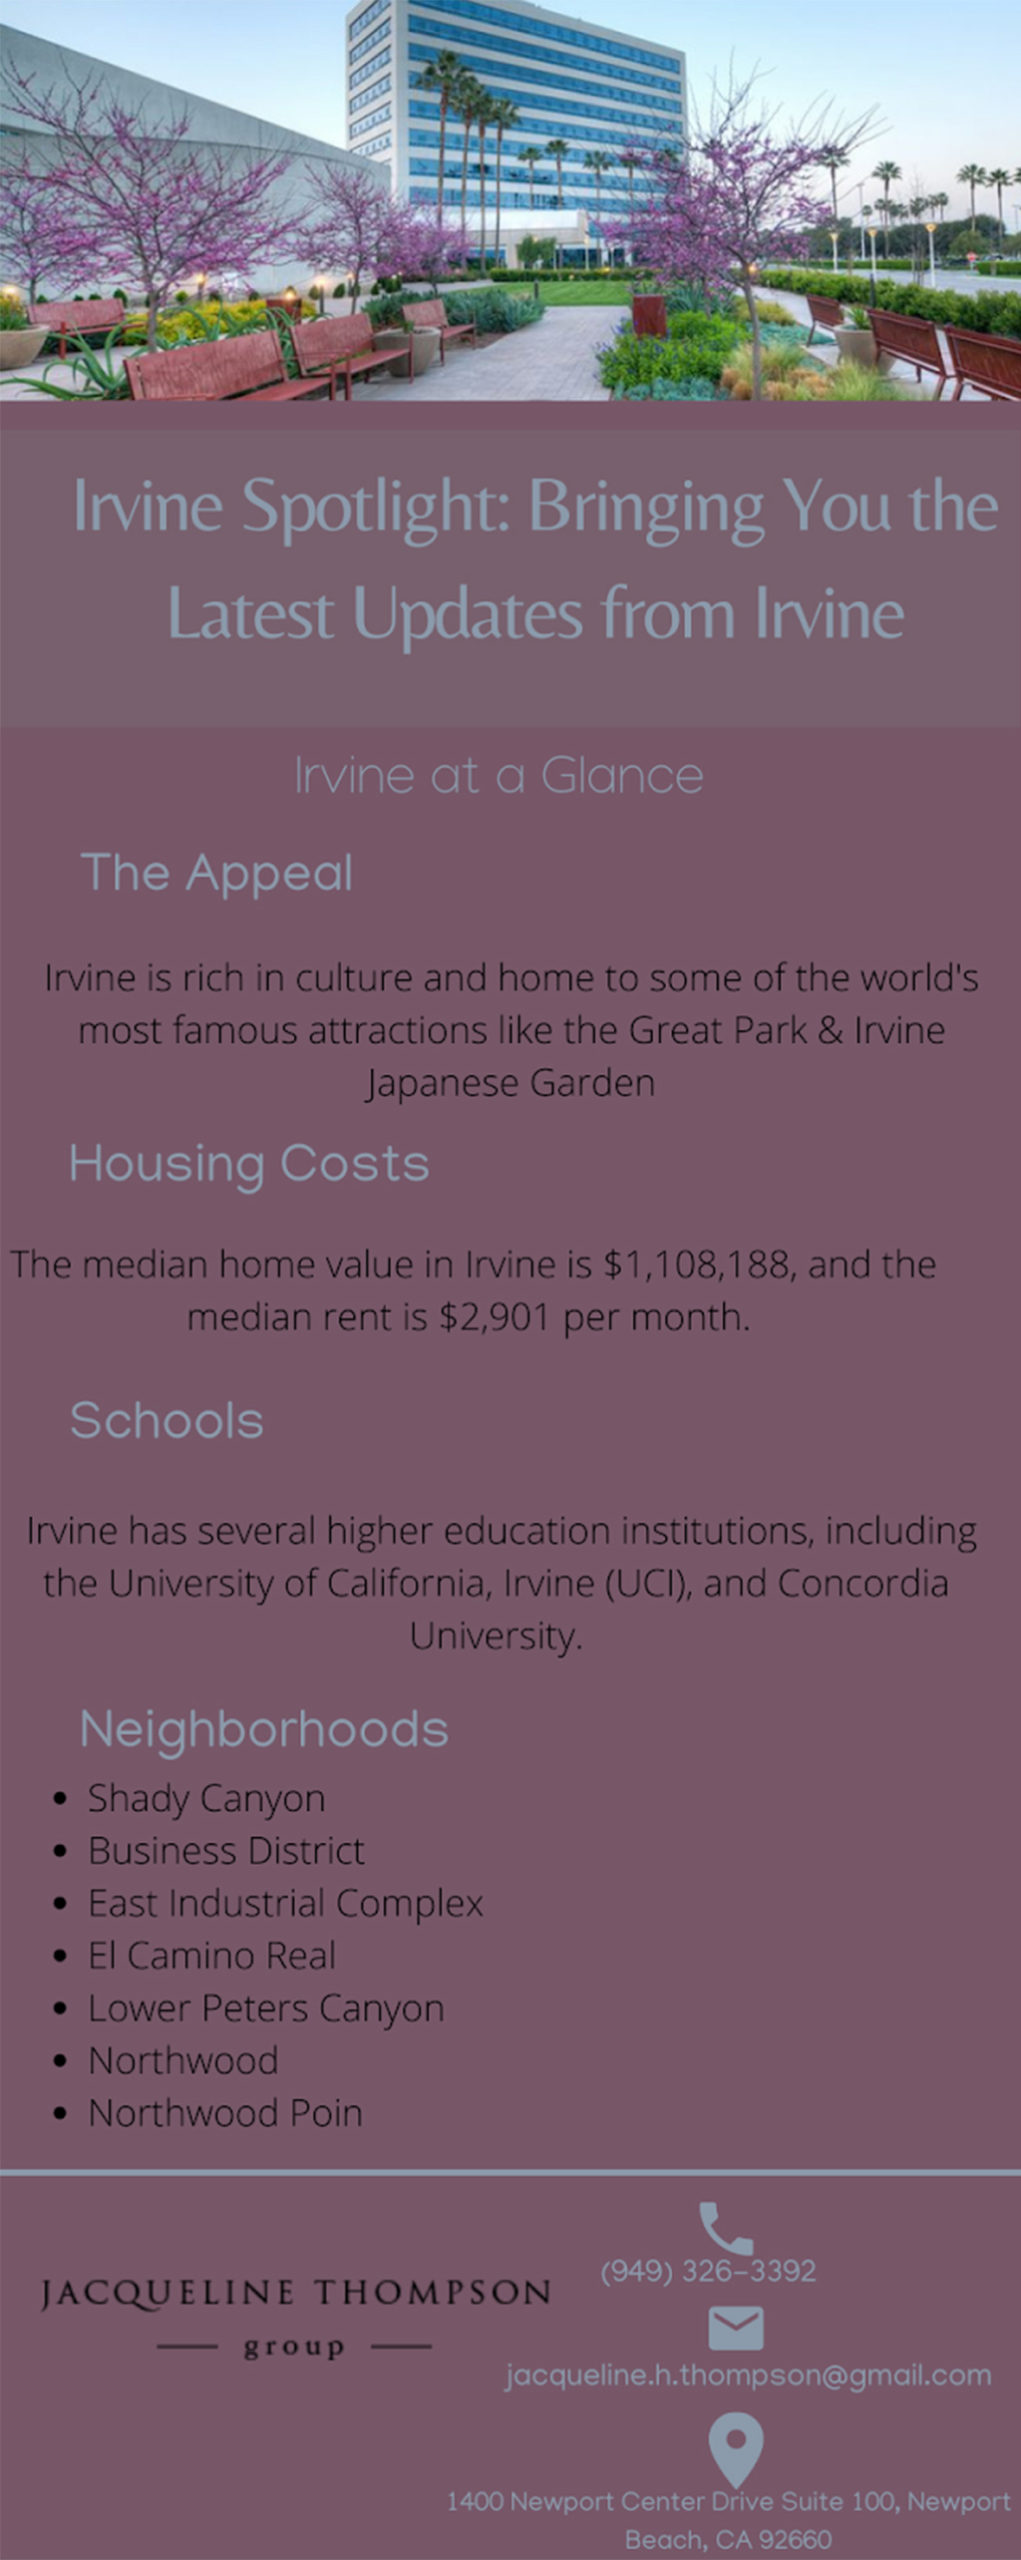 Irvine Spotlight infographic v2